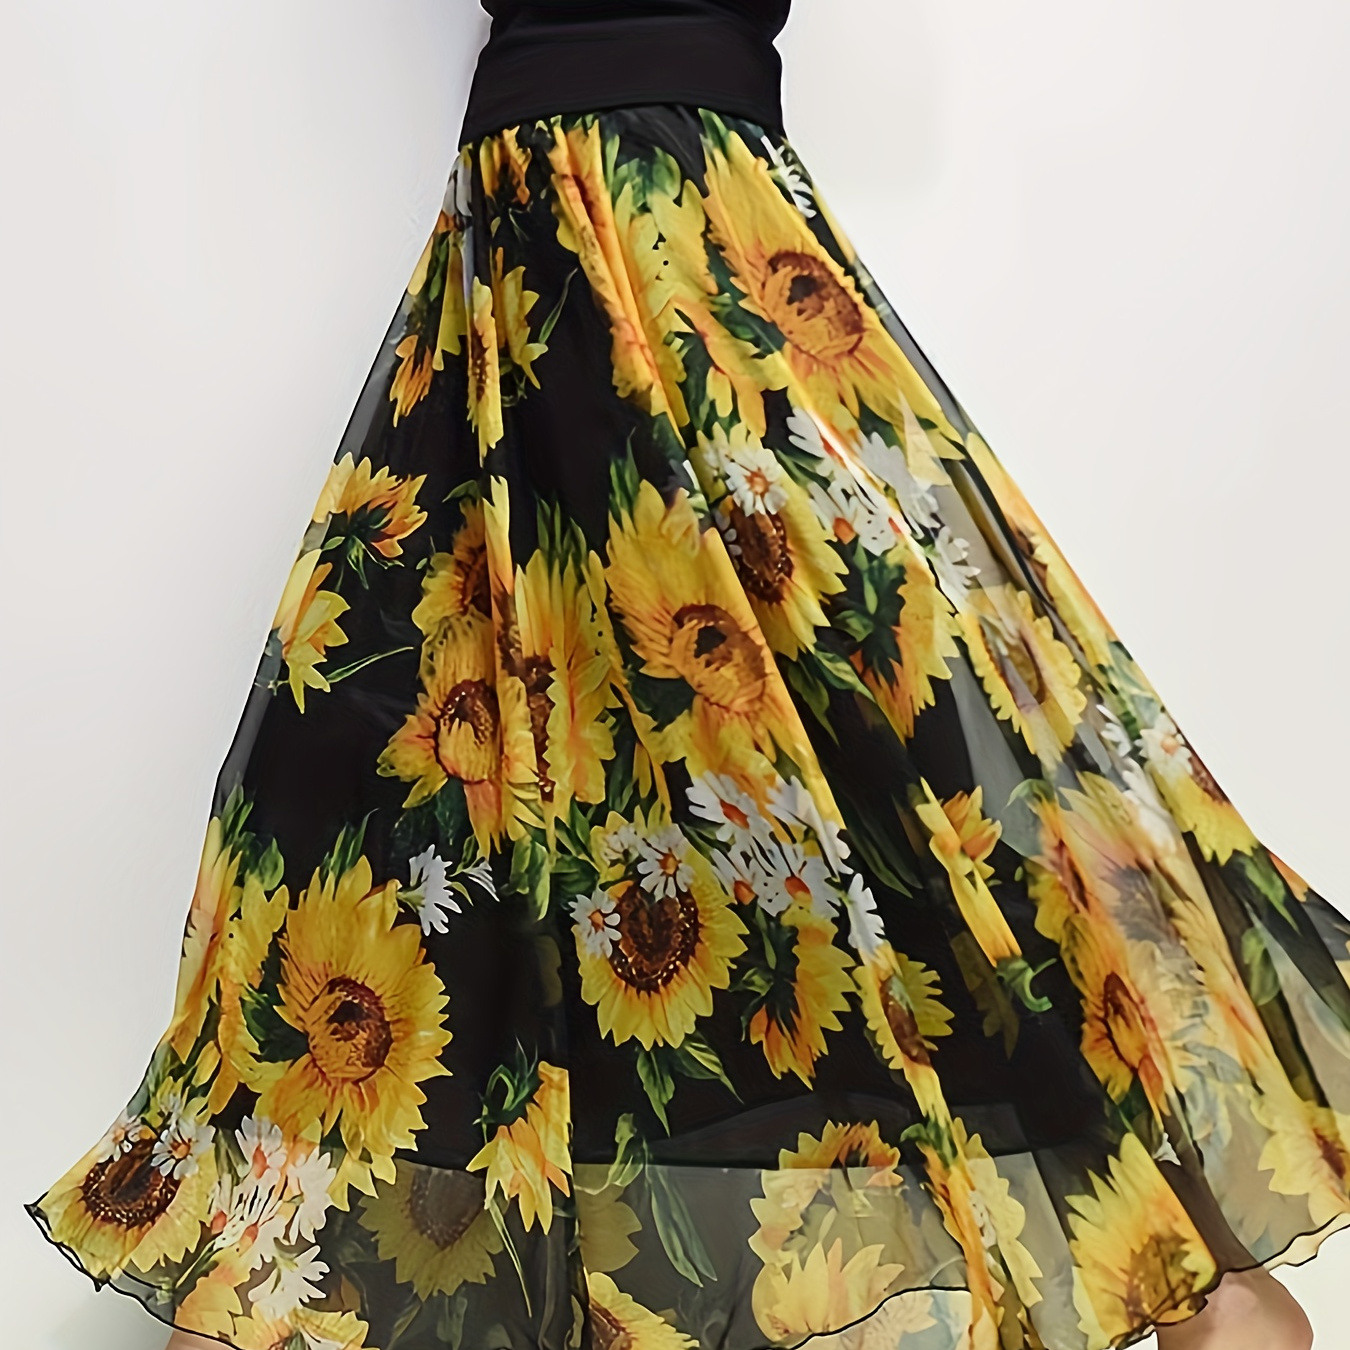 

Sunflower Print High Waist Skirt, Boho Maxi Beach Skirt For Spring & Summer, Women's Clothing